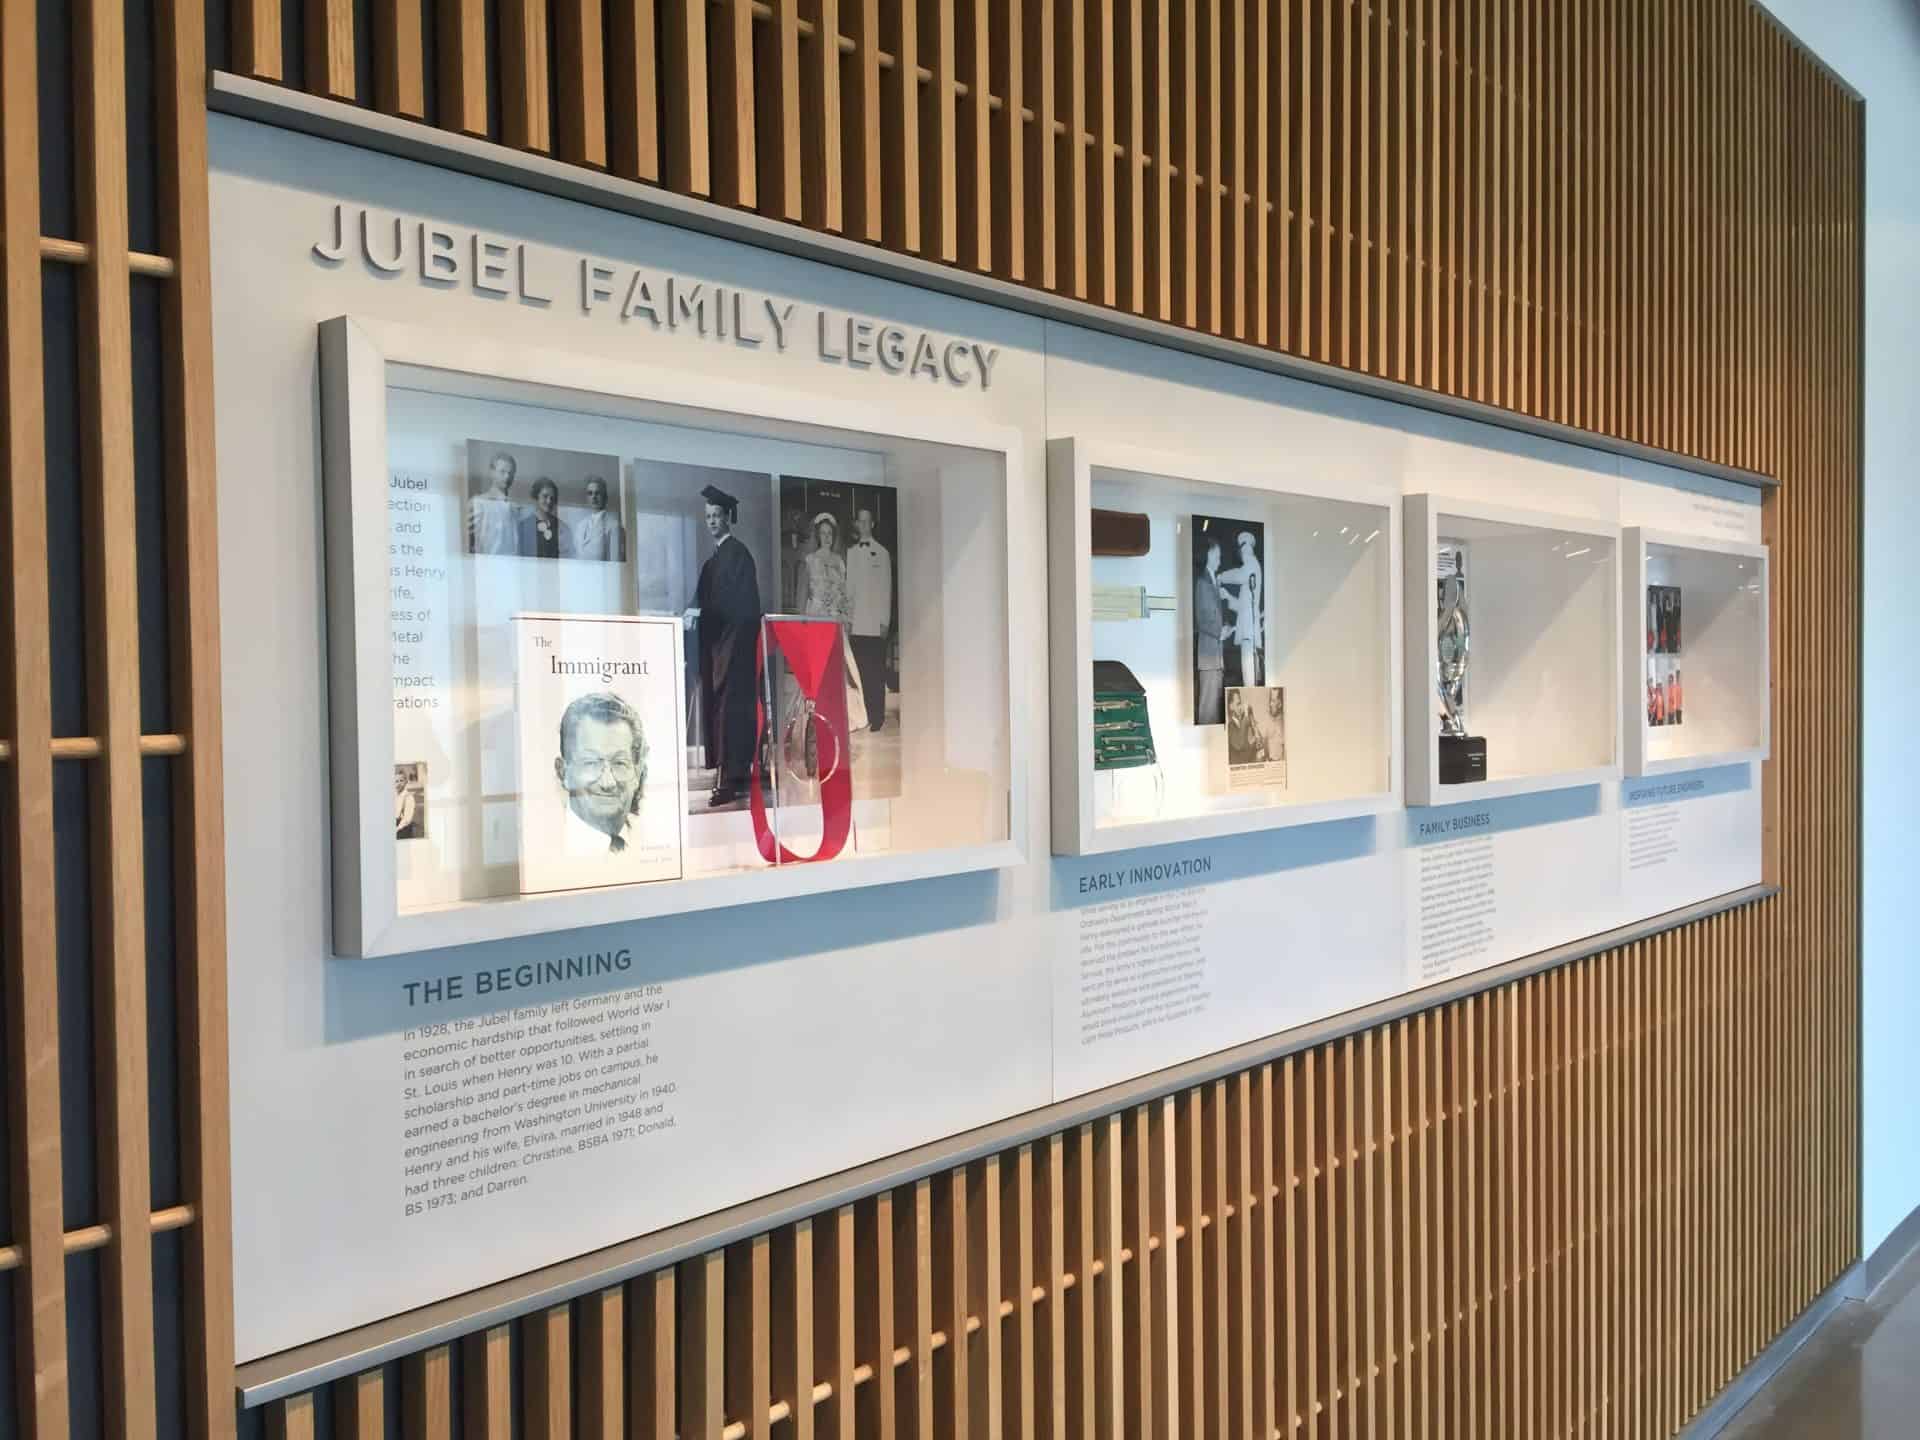 Interpretive display for Jubel Family Legacy exhibit